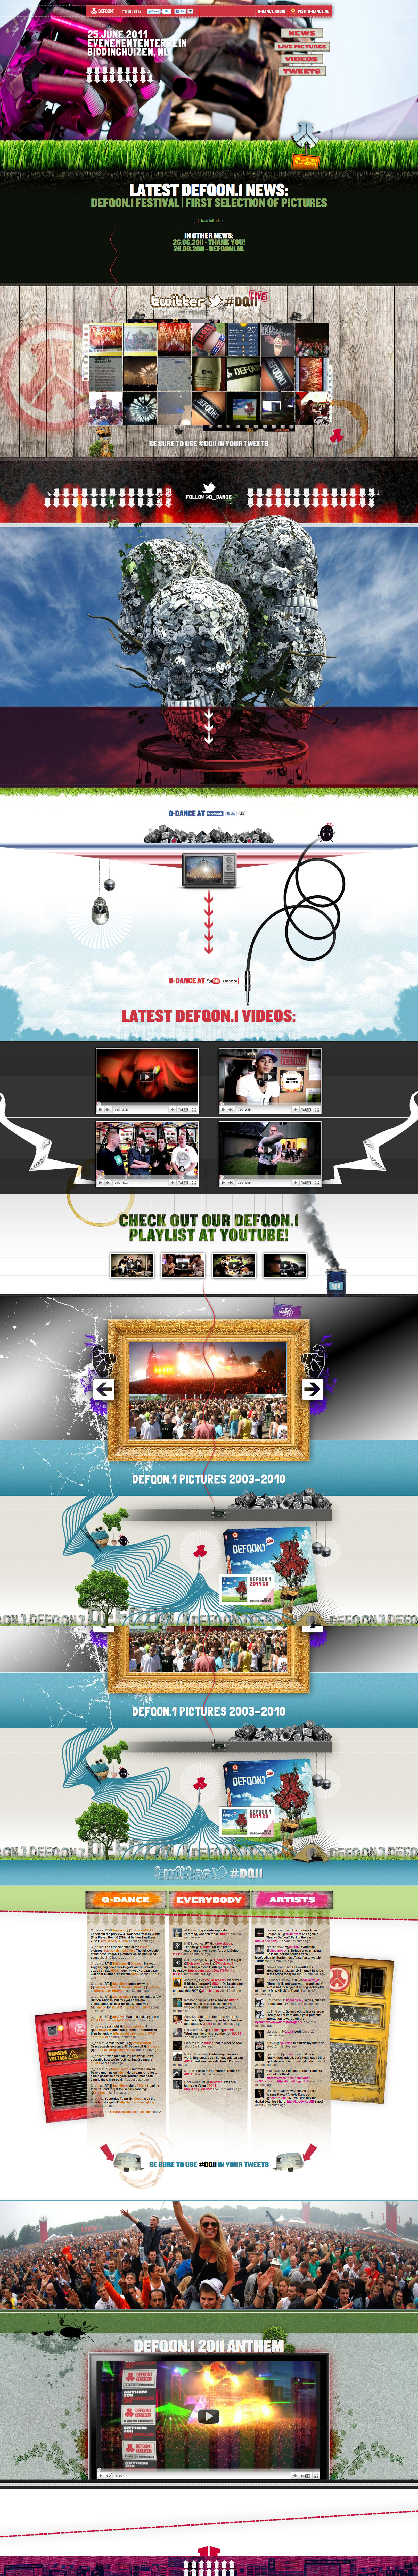 Defqon.1 Festival 2011 Website Screenshot